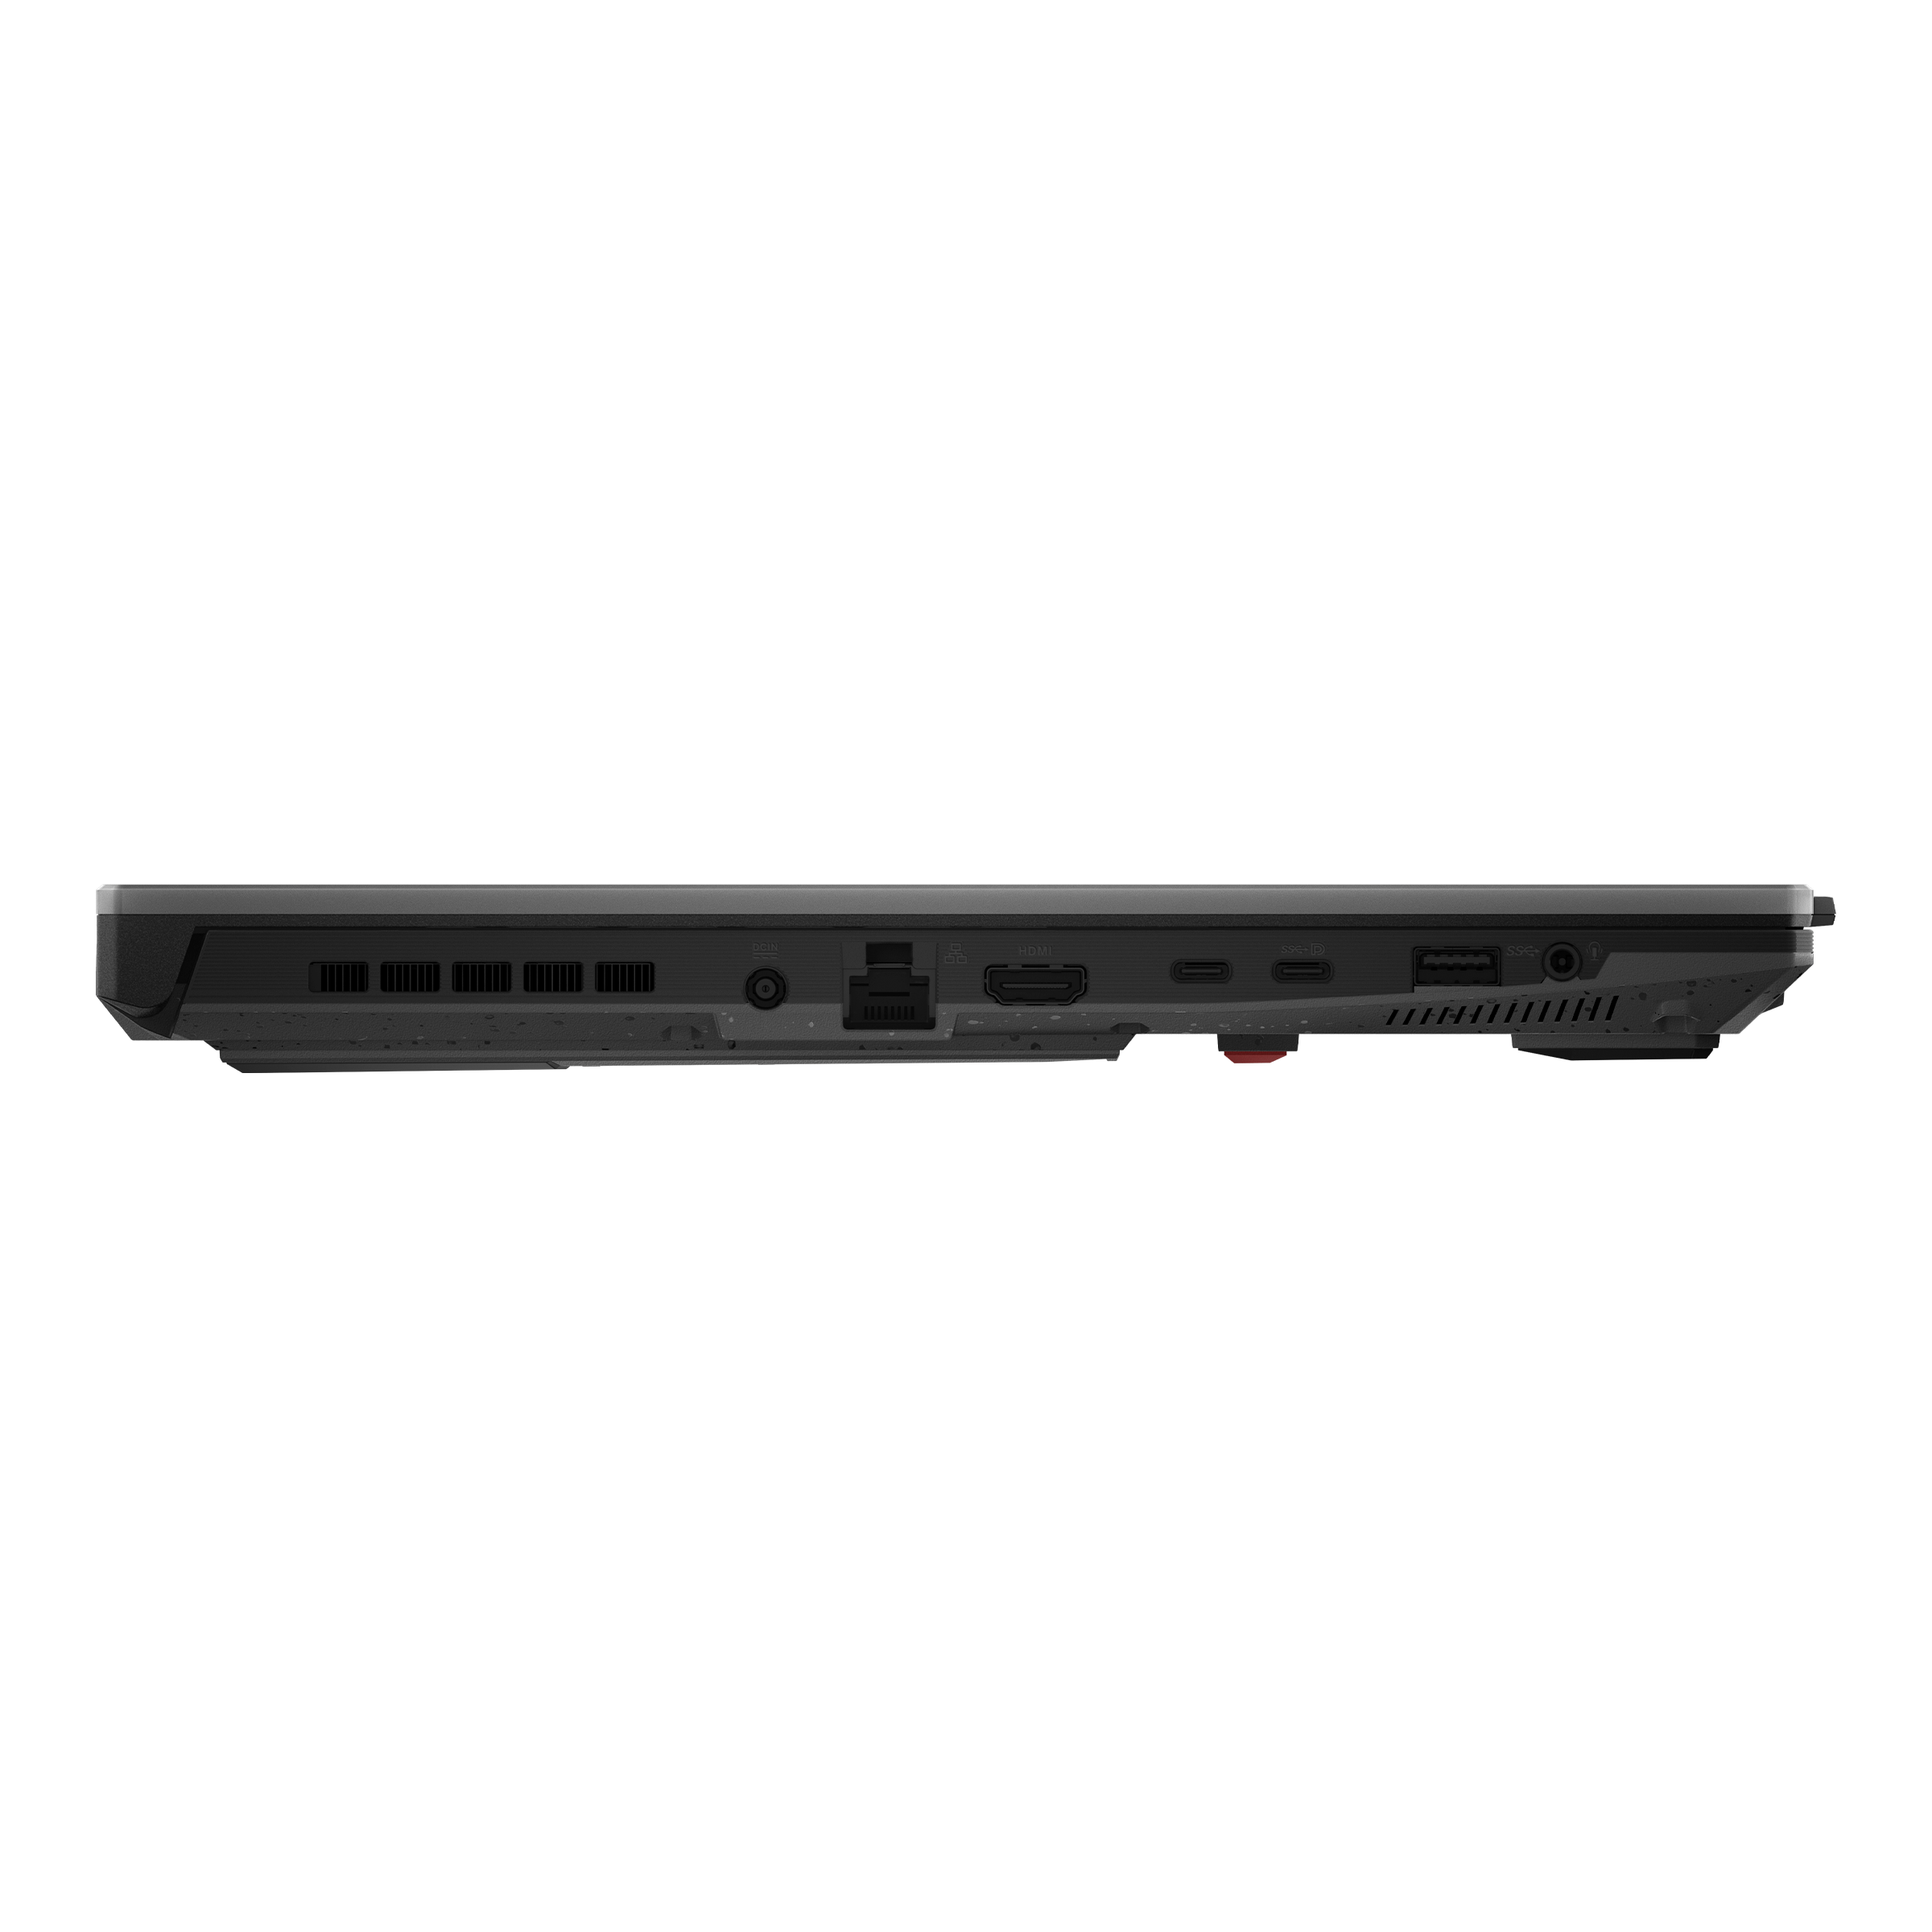 ASUS TUF Gaming A17 (2022)｜Laptops For Gaming｜ASUS Global